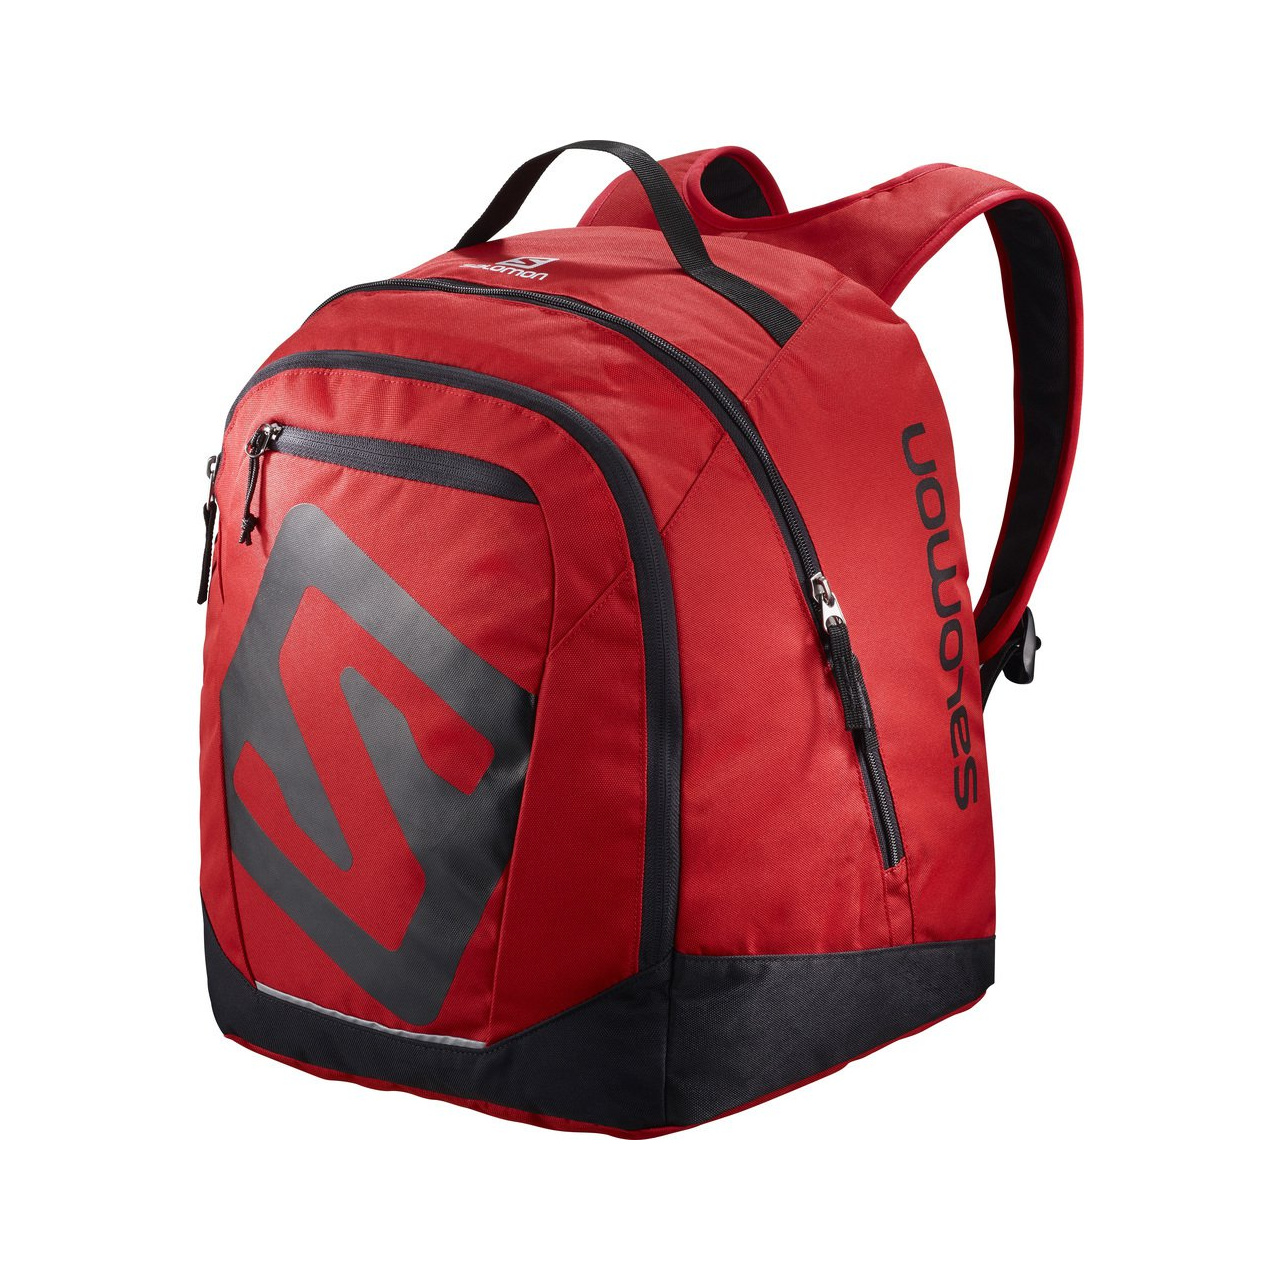 Salomon Original Gear Backpack